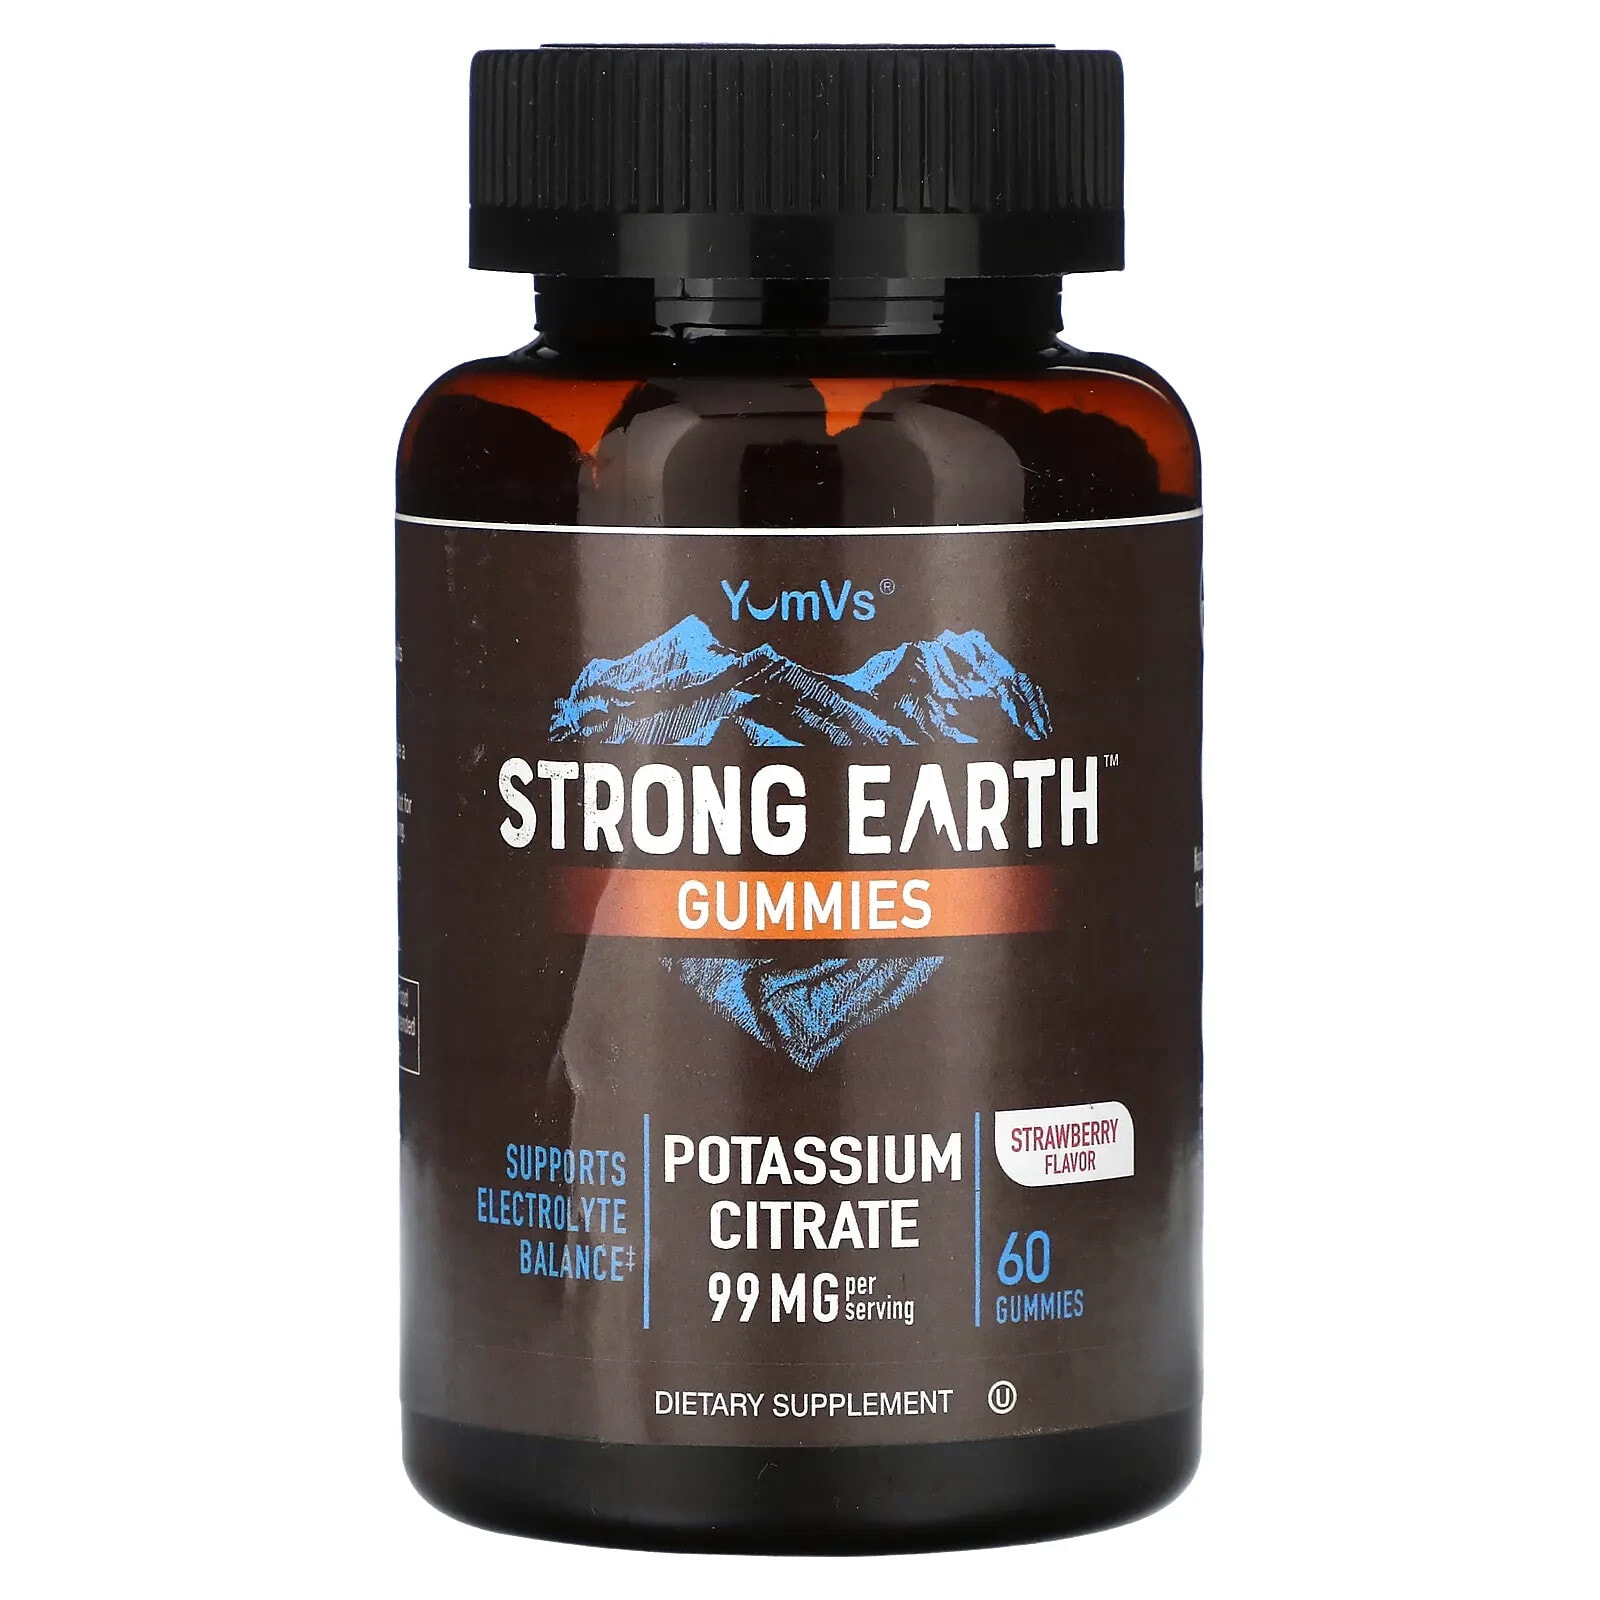 Strong Earth Gummies, Potassium Citrate, Strawberry, 99 mg, 60 Gummies (49.5 mg per Gummy)